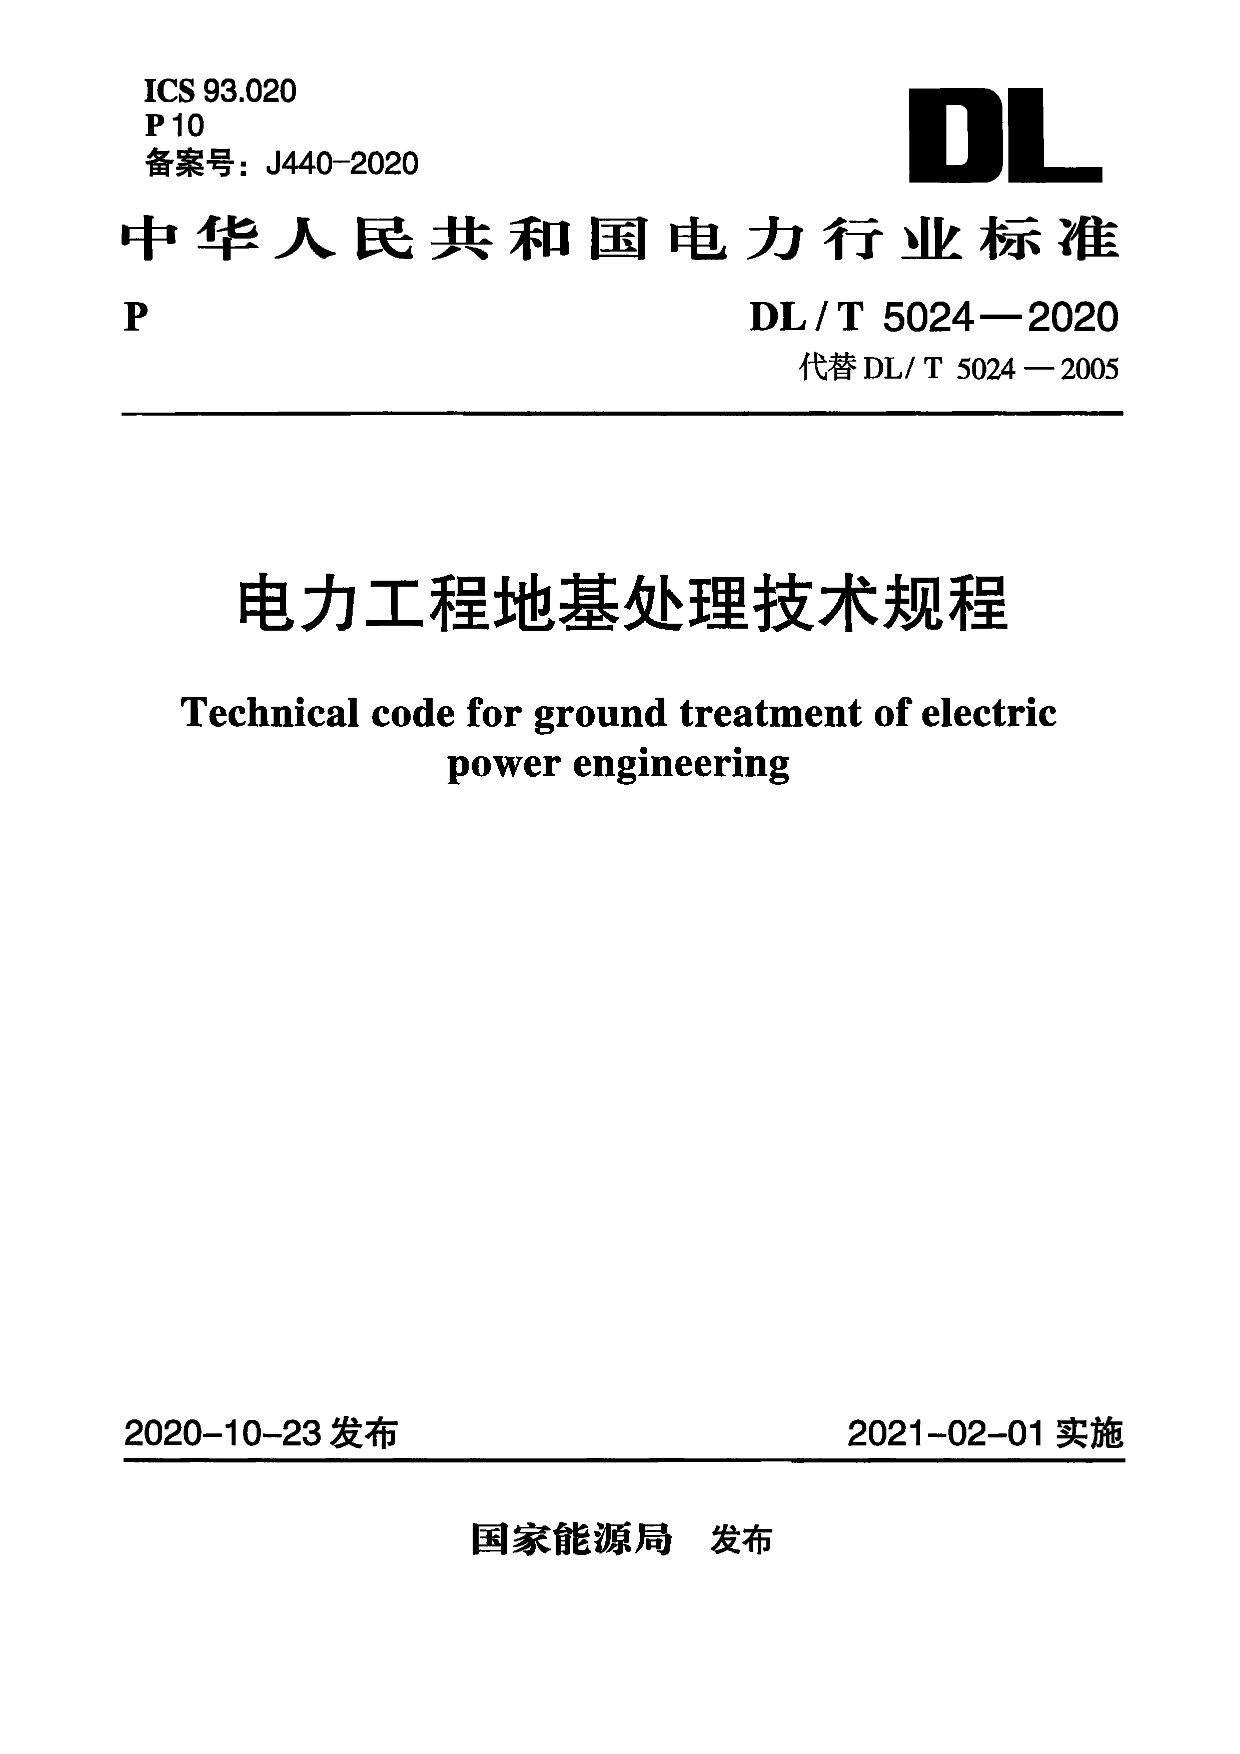 DL/T 5024-2020封面图